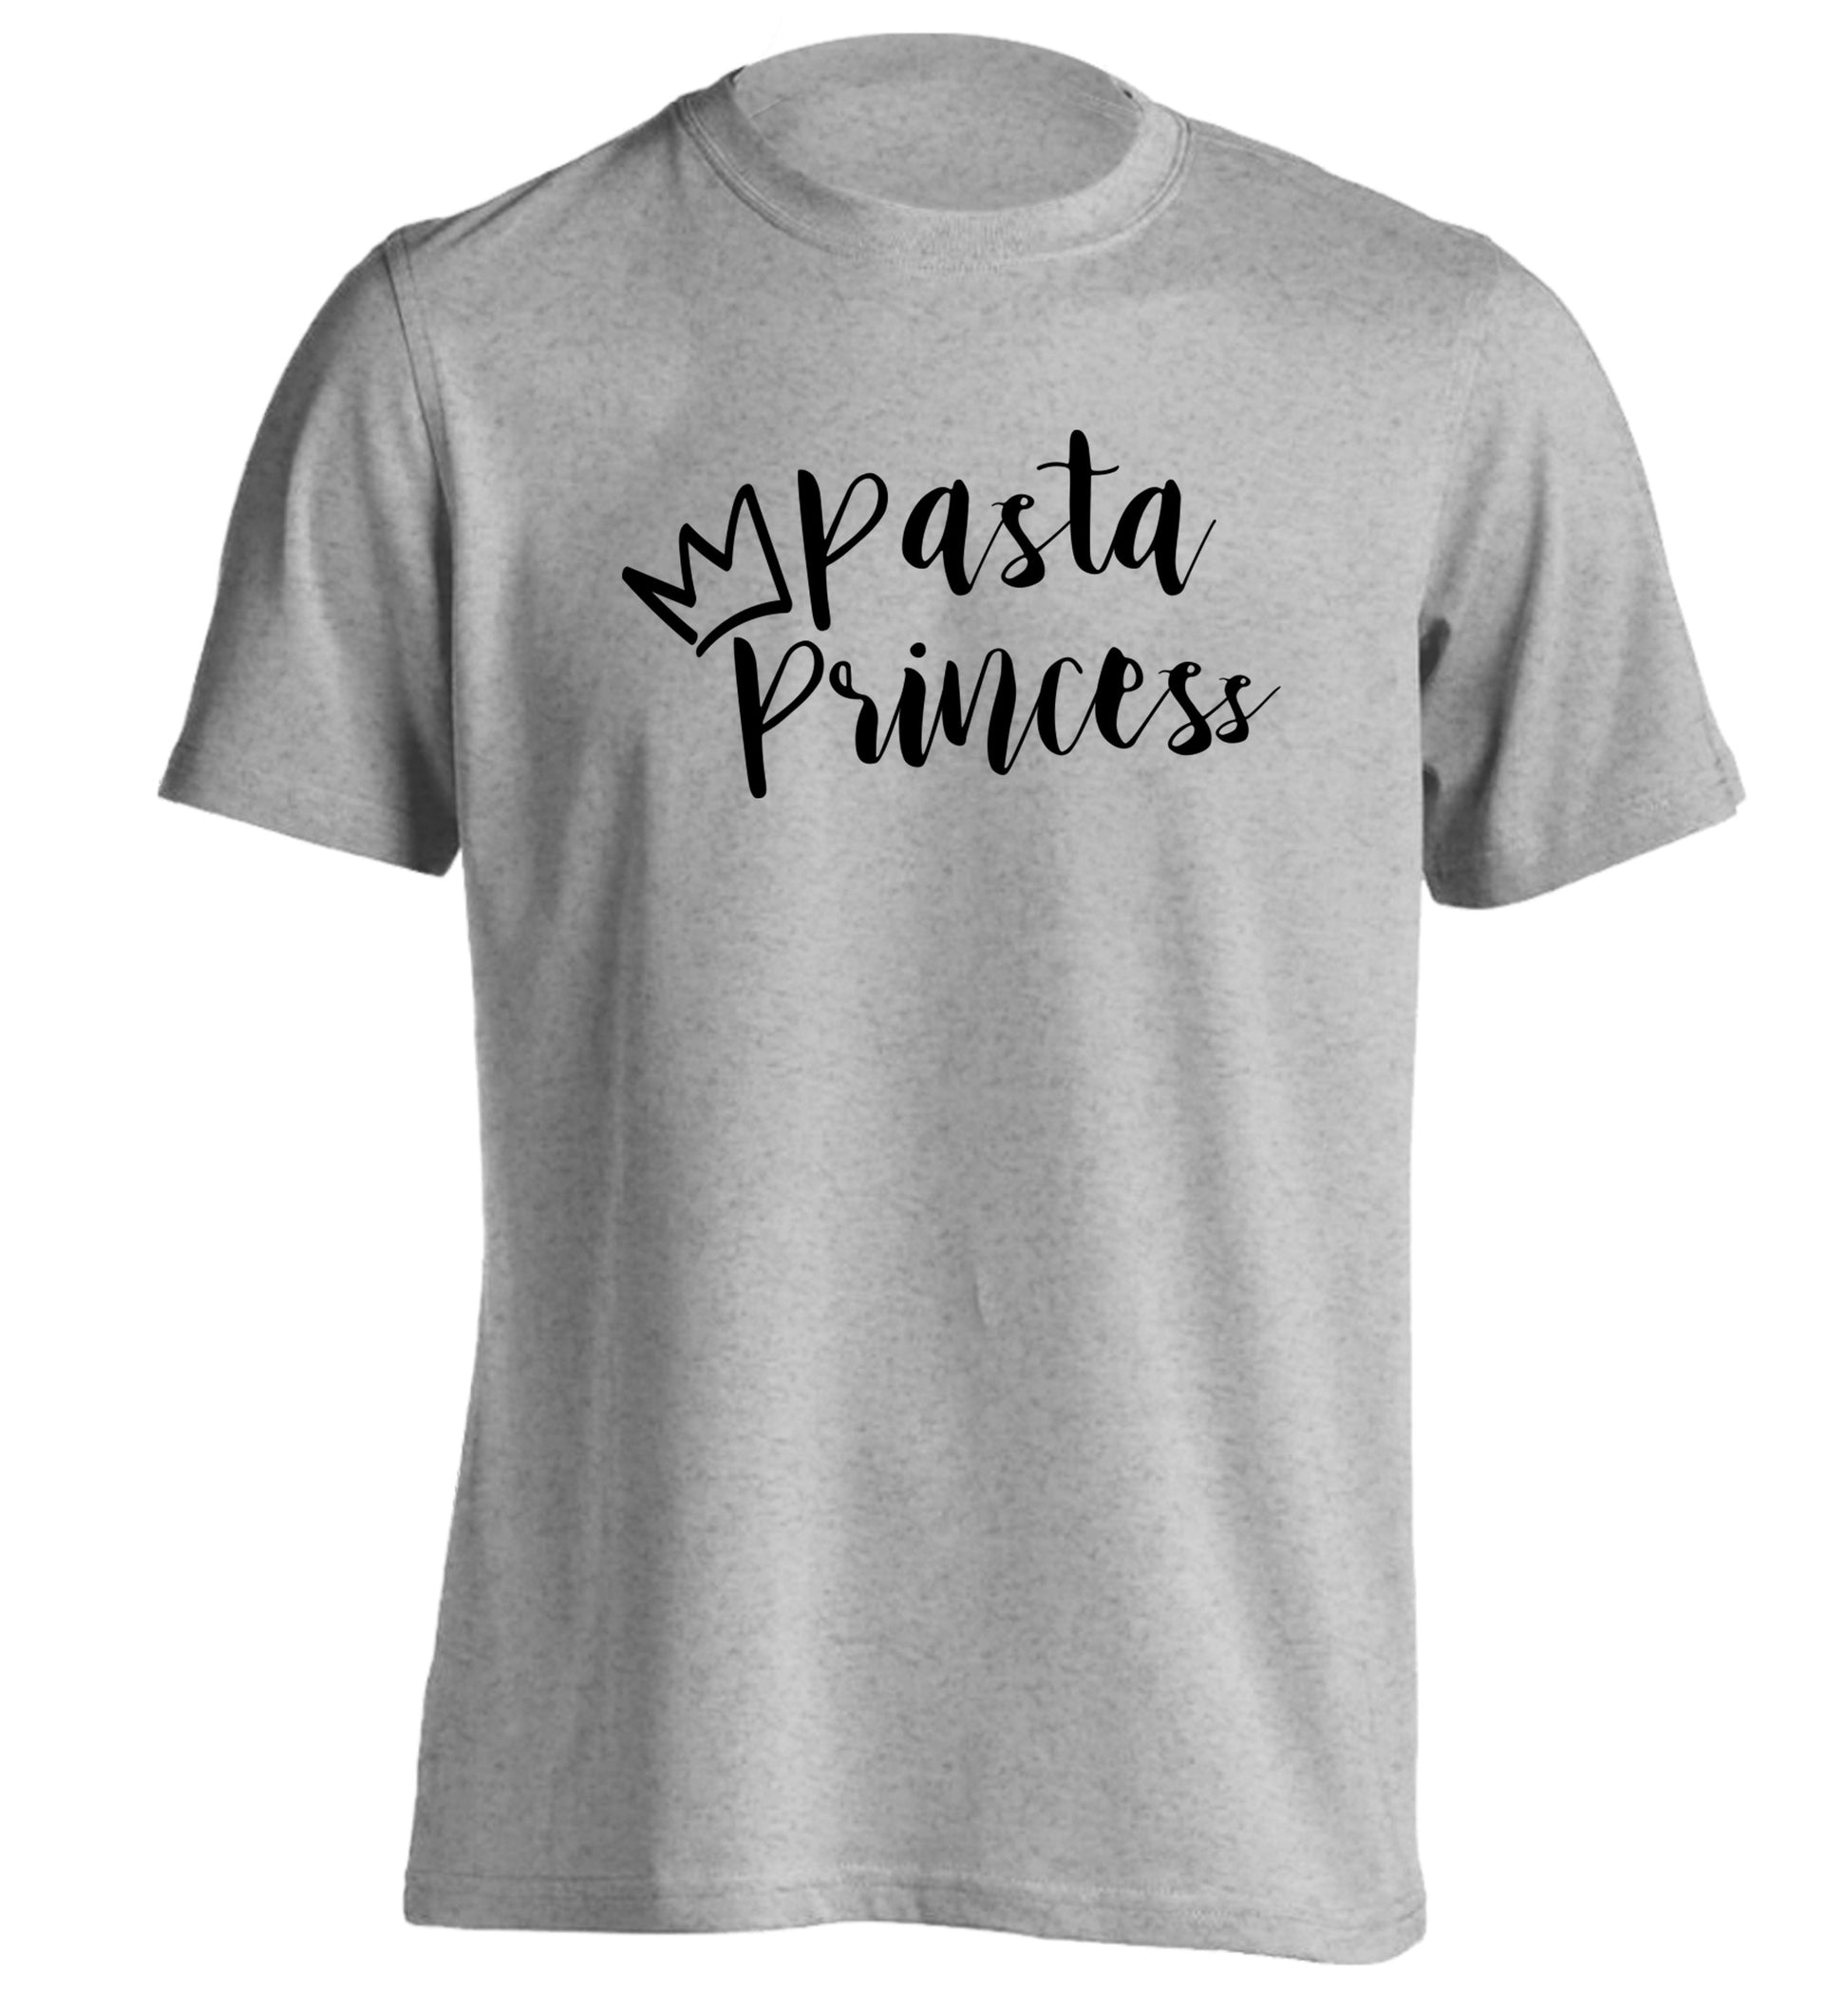 Pasta Princess adults unisex grey Tshirt 2XL